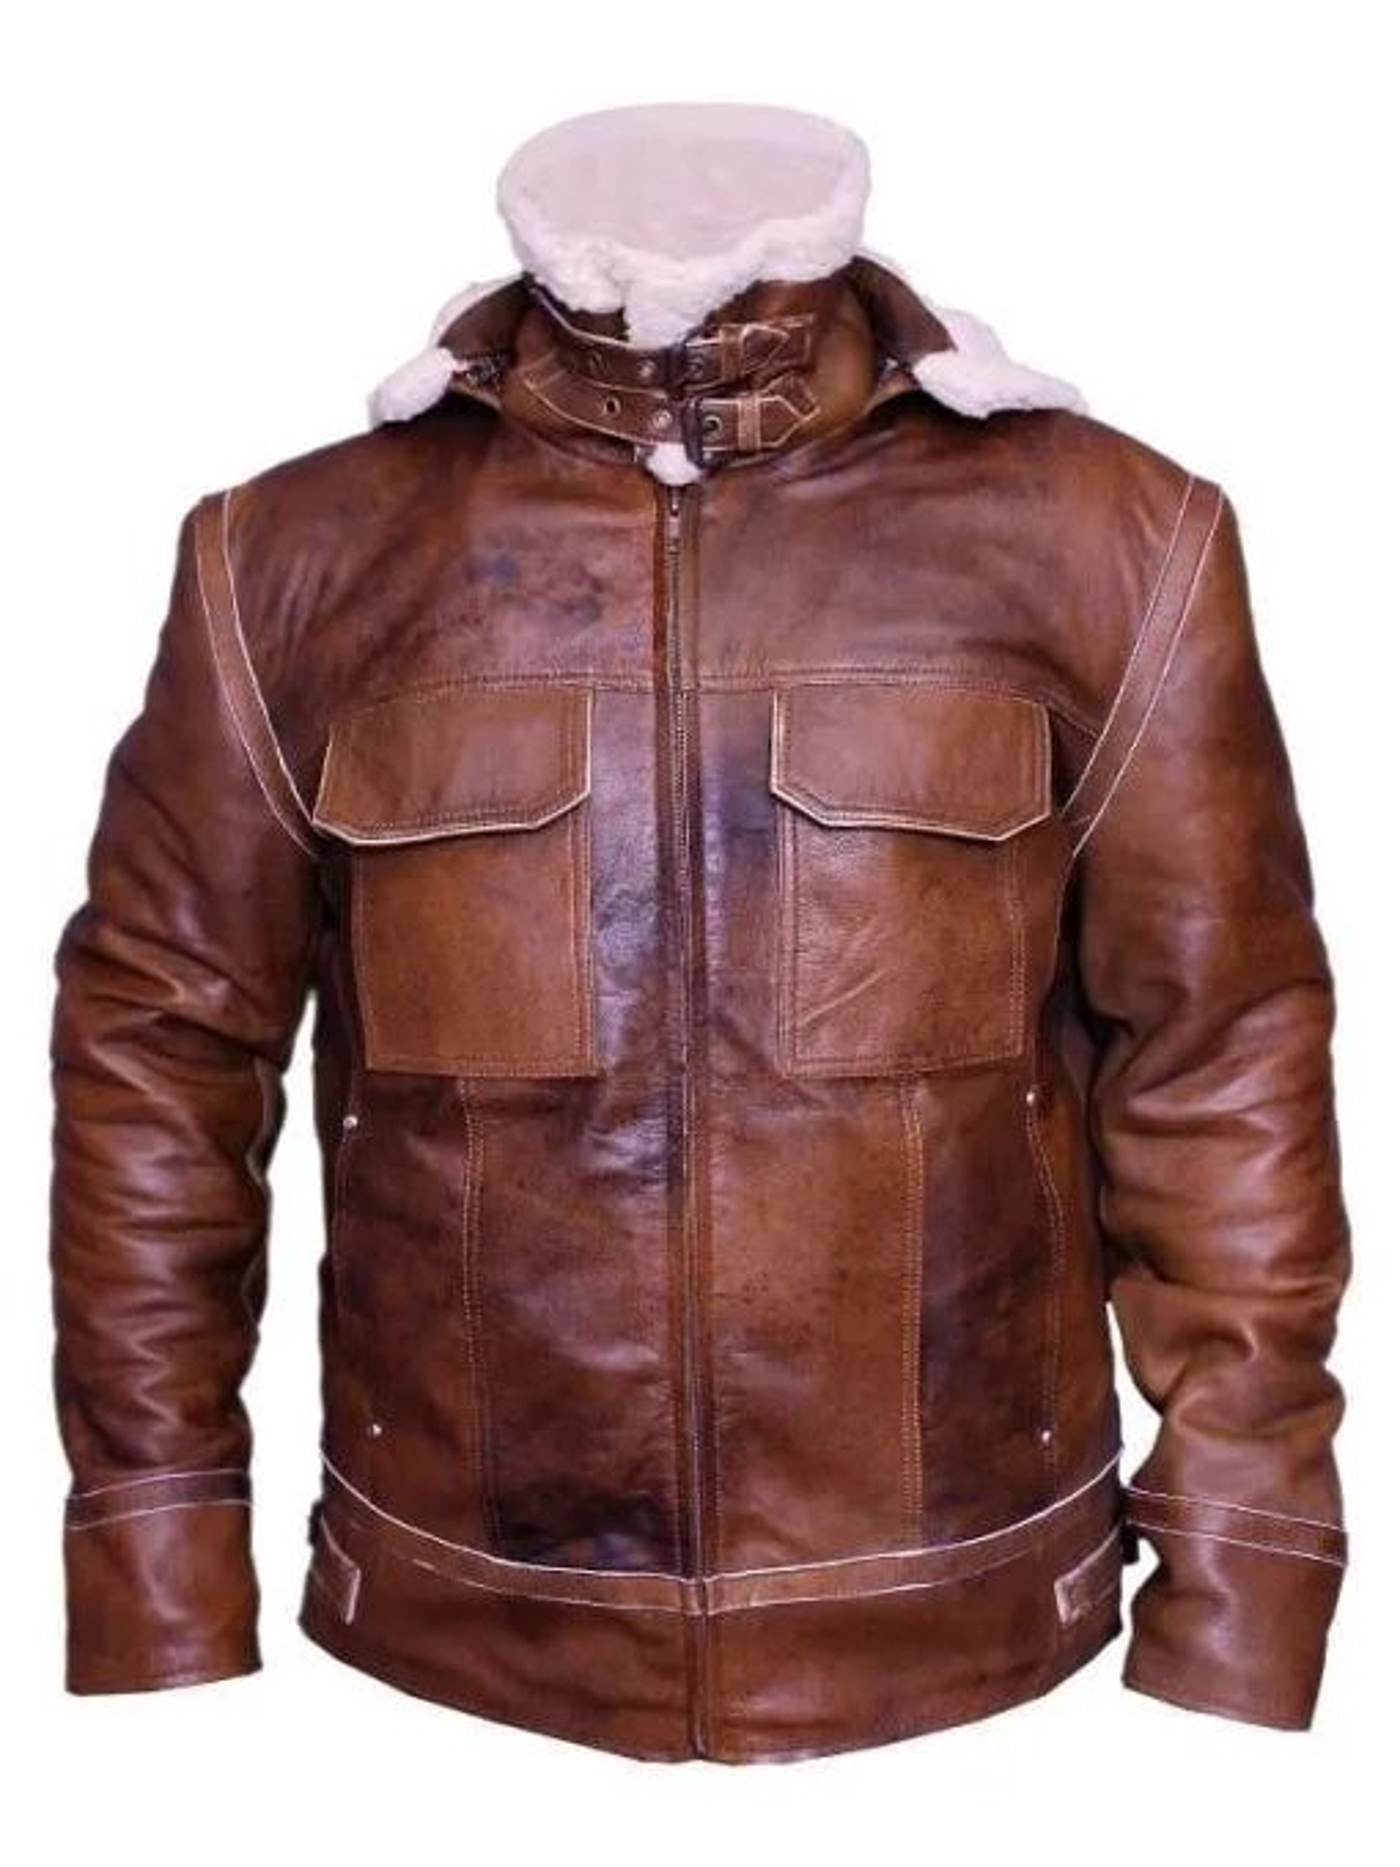 jacket Clothing Fashion  leather jackets SHEARLINGLAND winter clothing design apparel shearlingland jackets